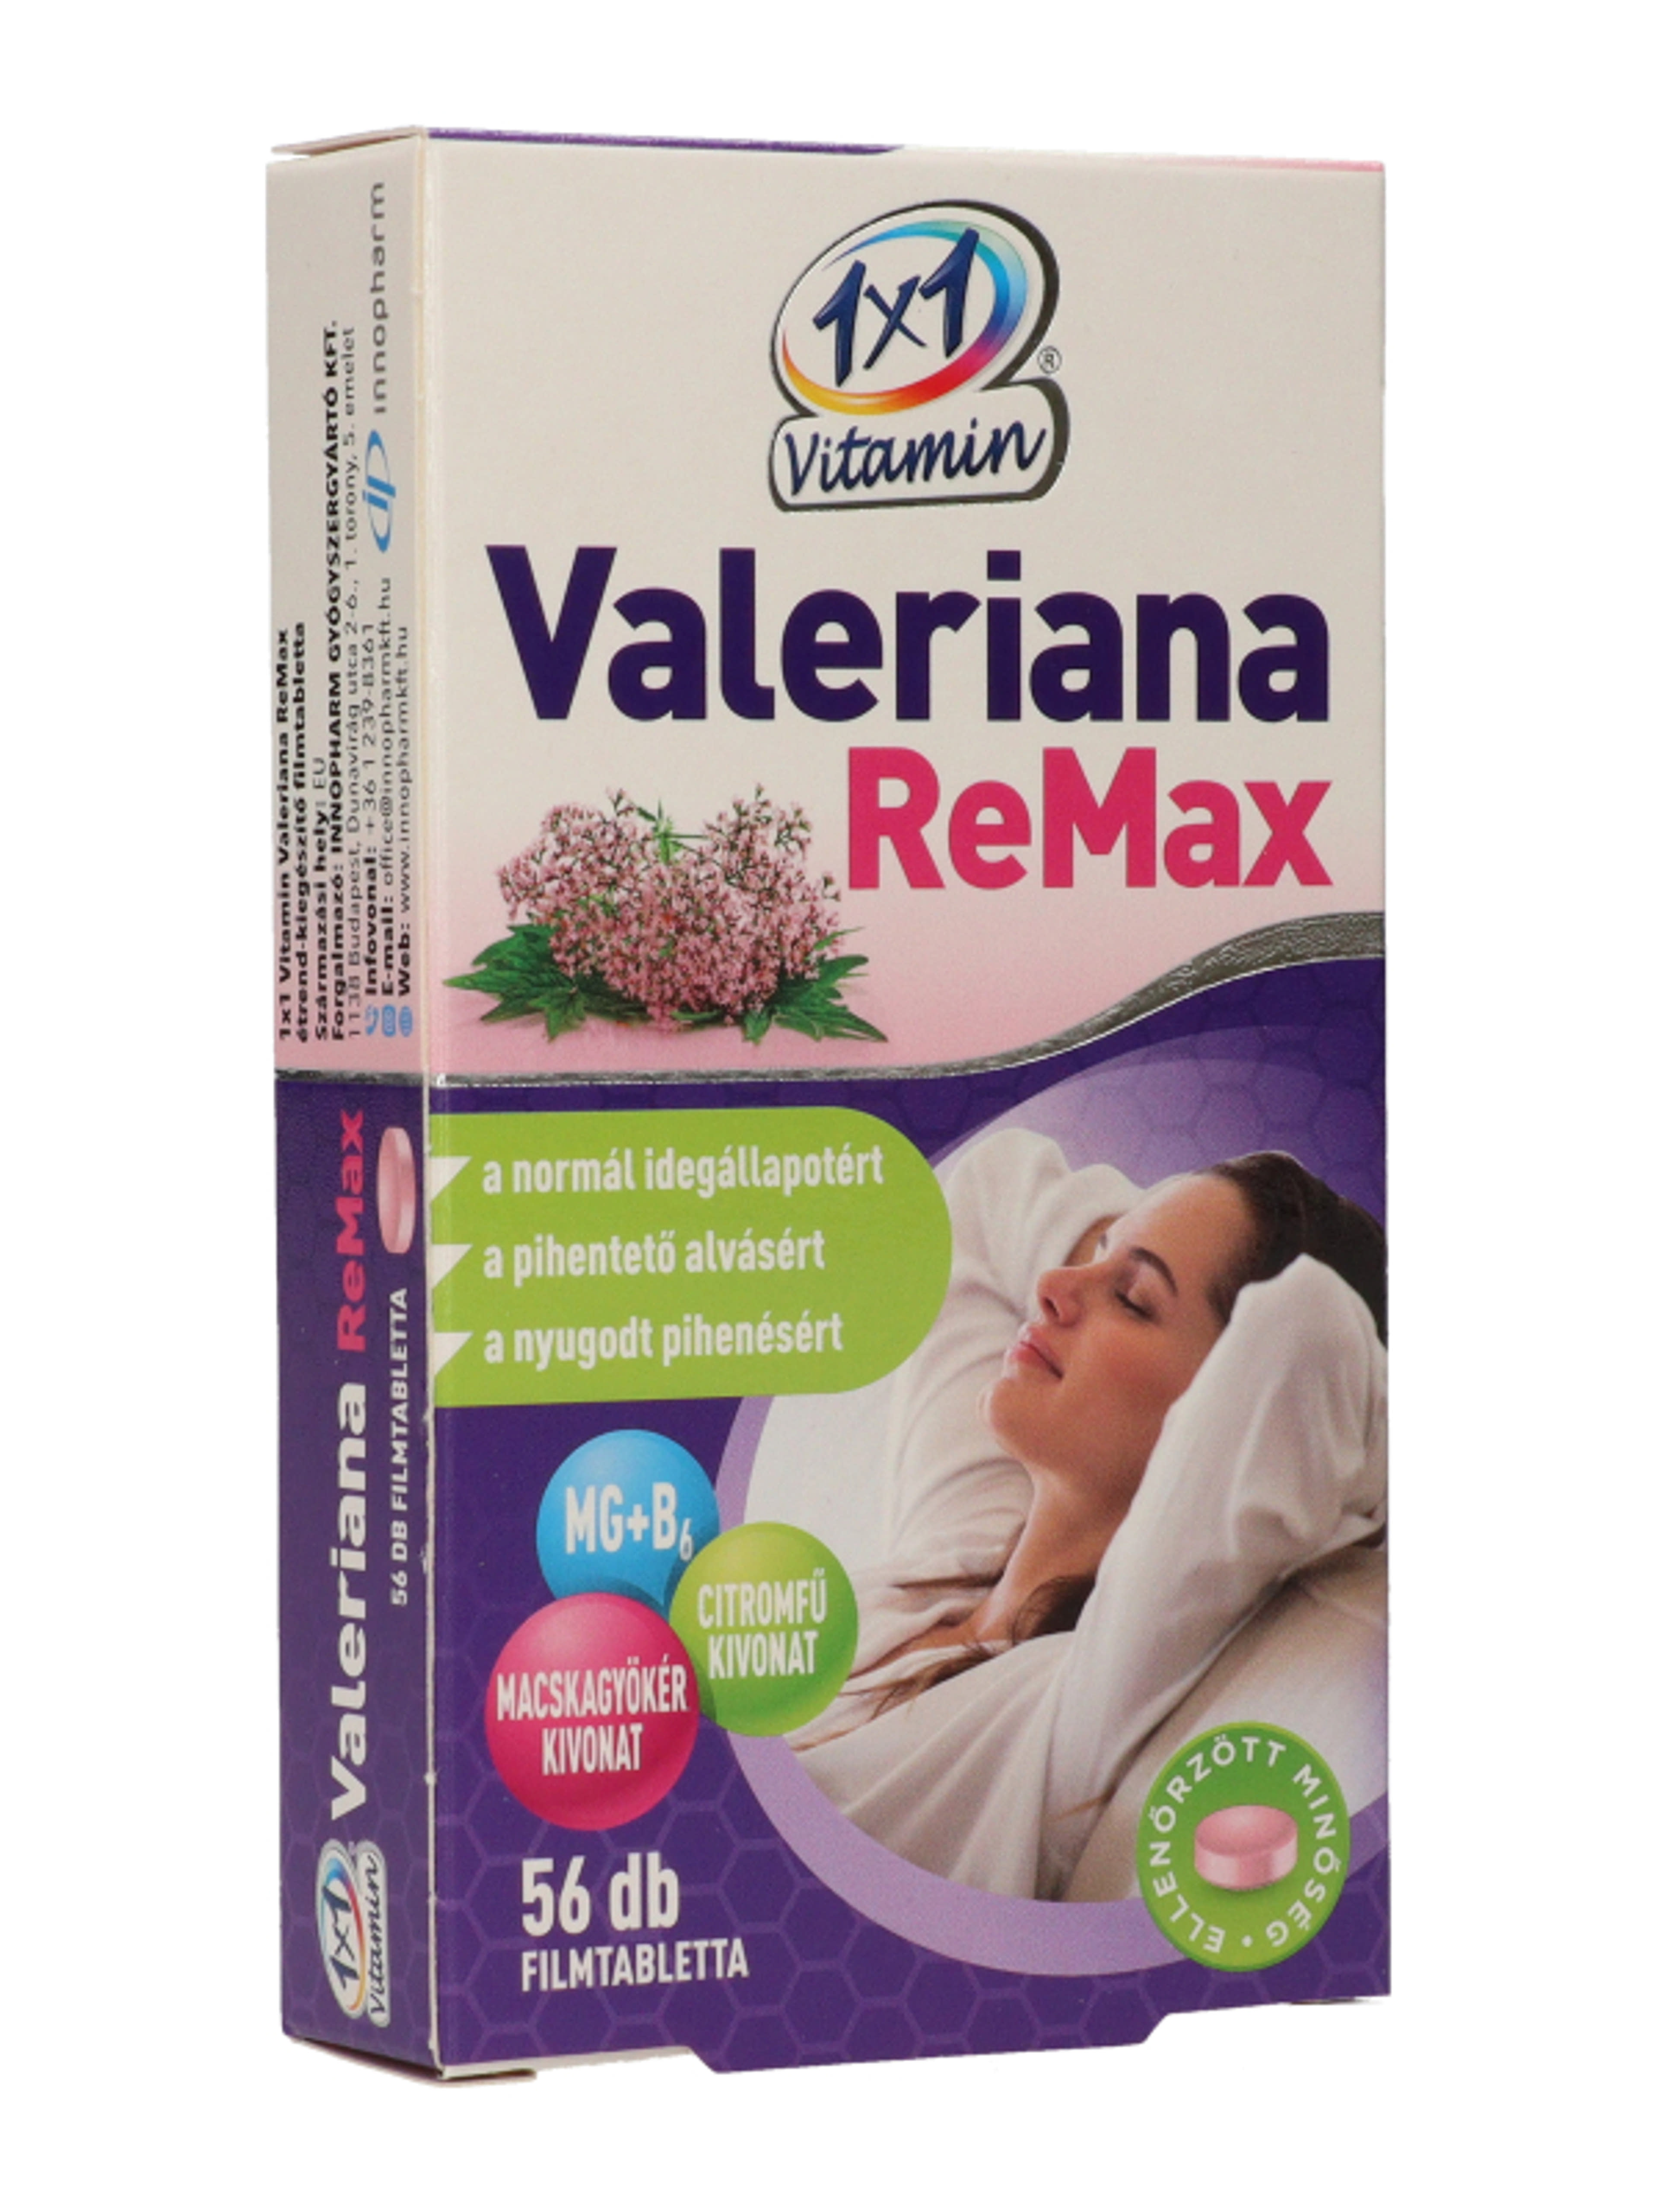 1x1 vitamin valeriana remax étrend-kiegészítő filmtabletta - 56 db-5